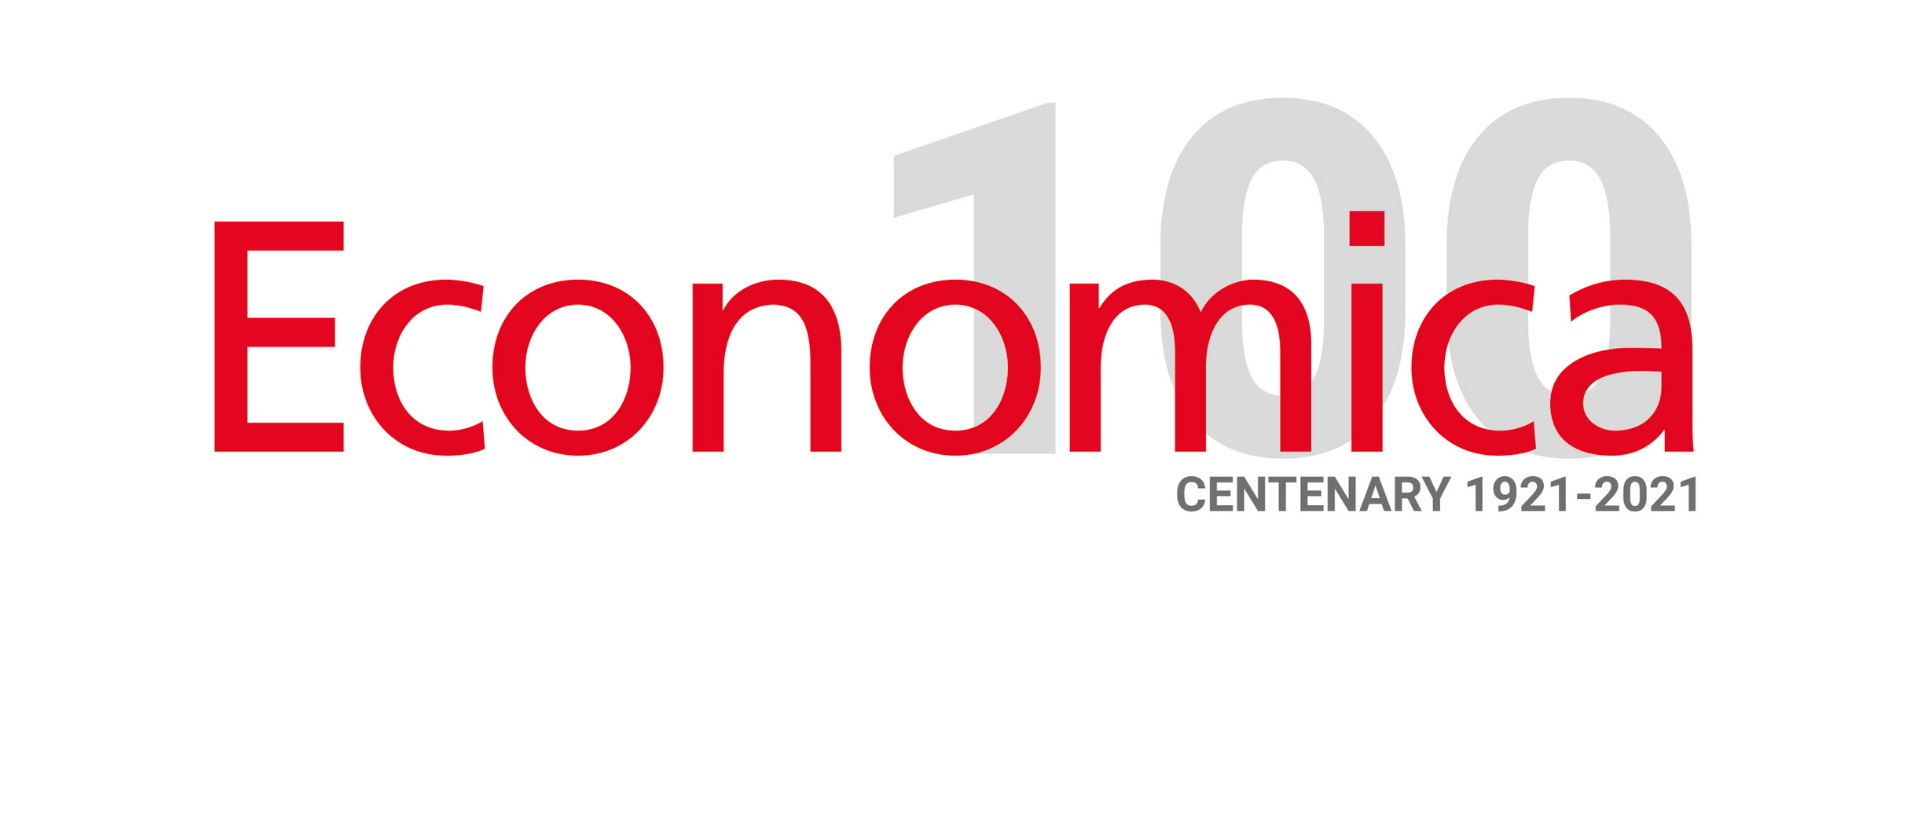 economica-centenary-conference-1920x830